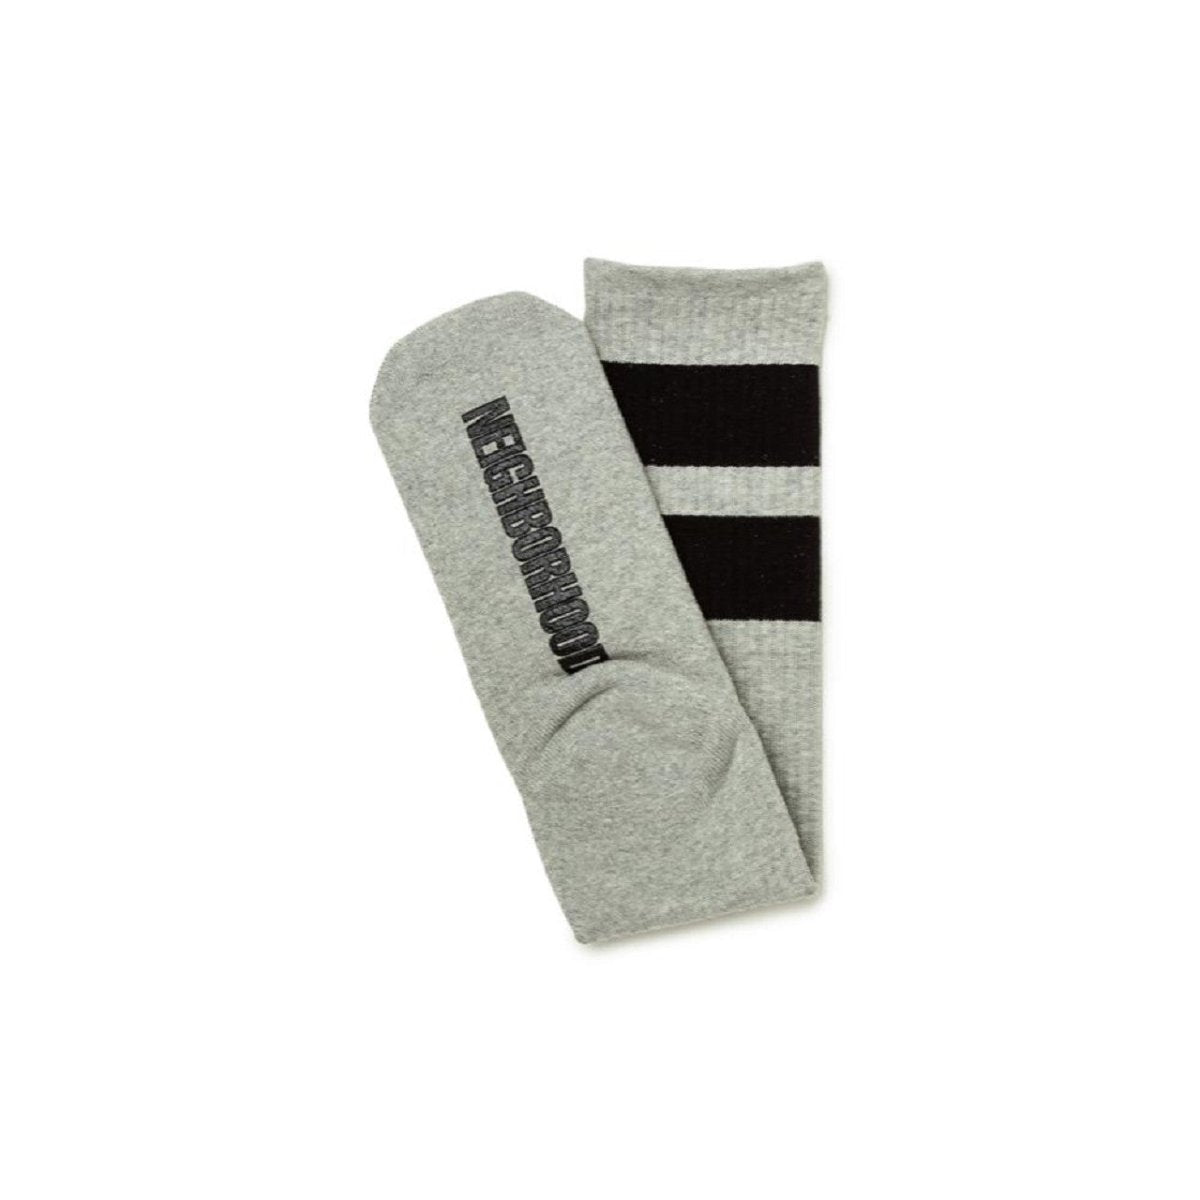 Neighborhood Classic 3-Pack Long/ Ca-Socks (Multi)  - Allike Store